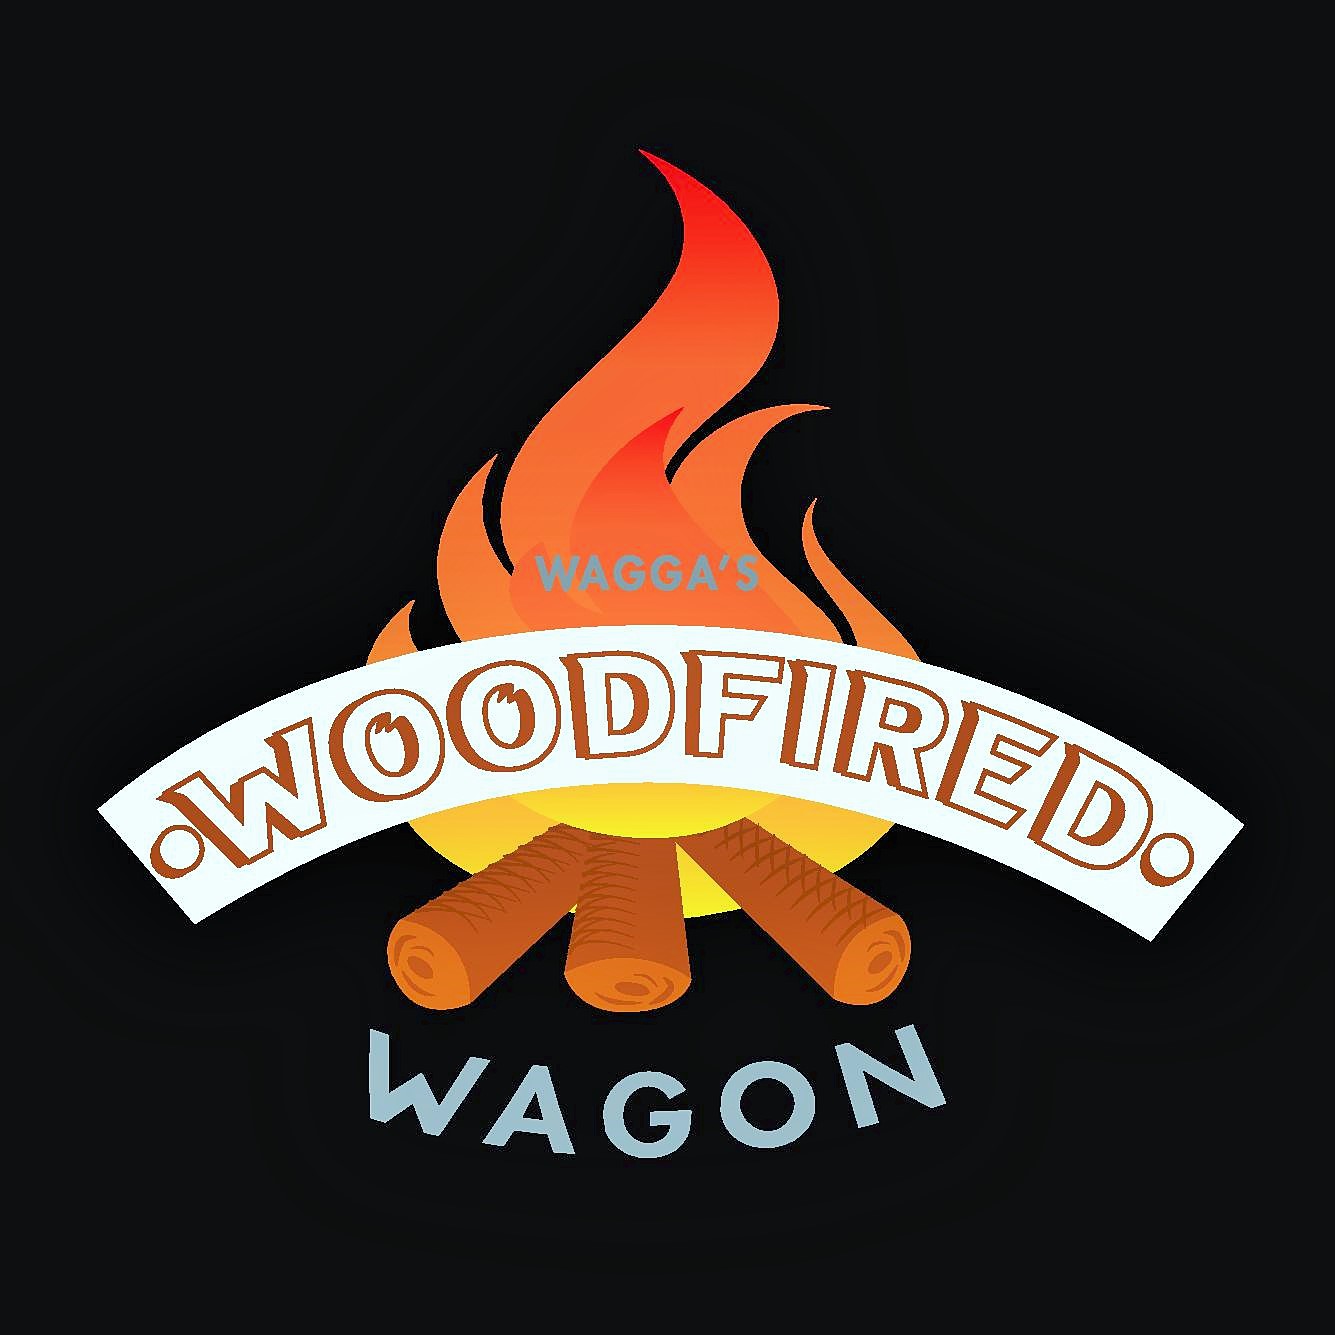 Wagga's Woodfired Wagon